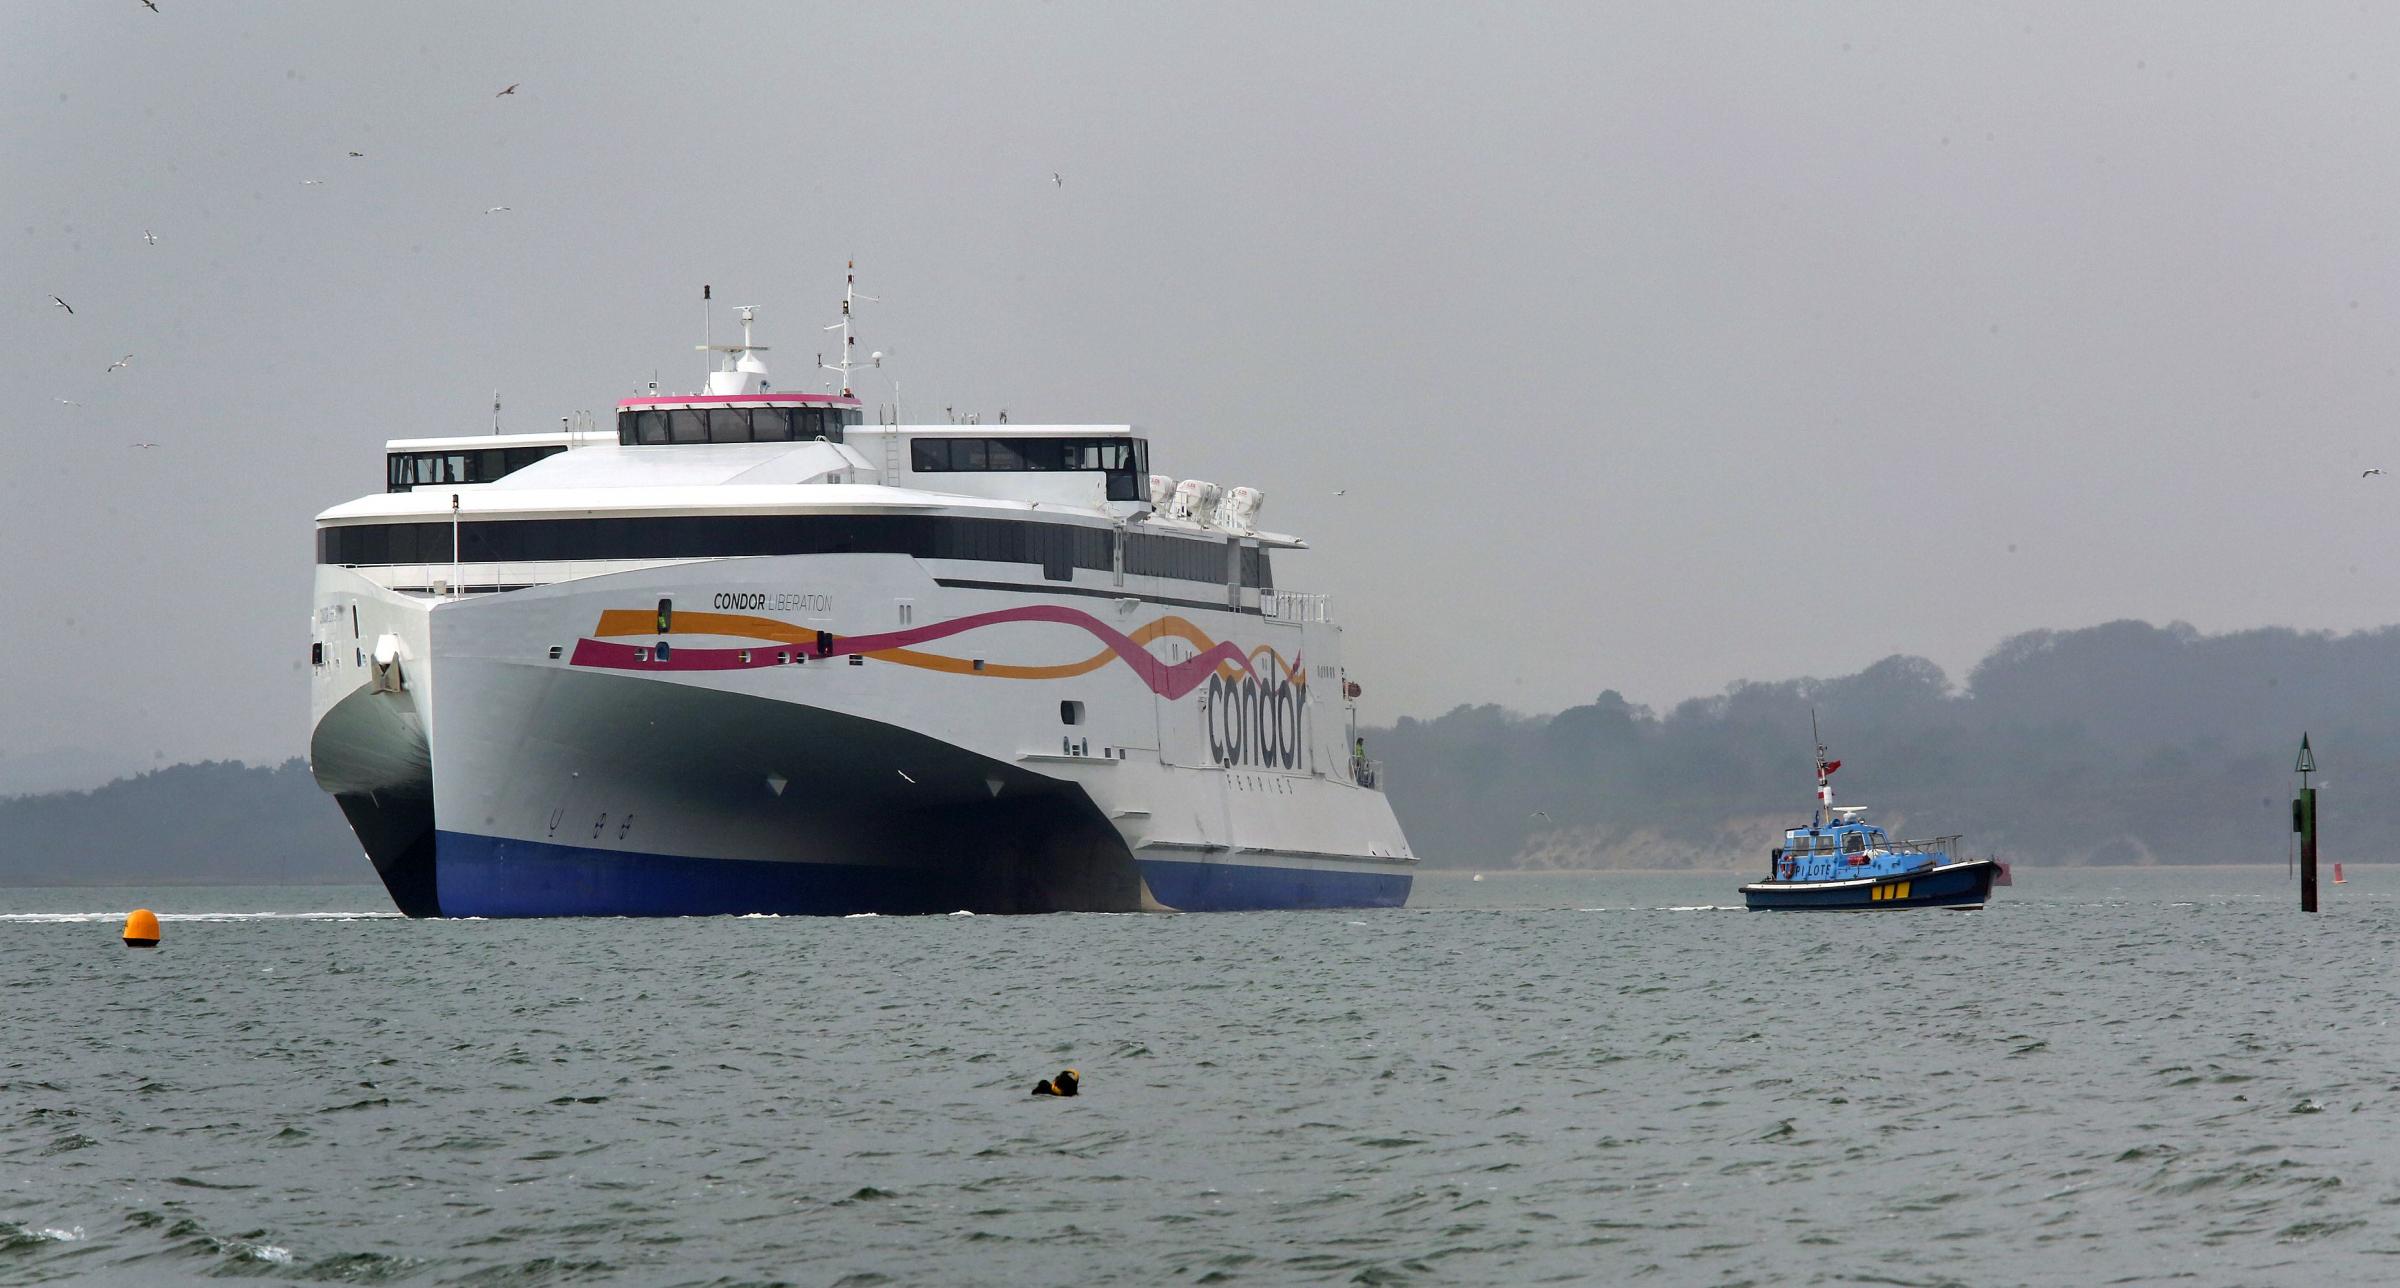 New Condor ferry damaged as it docks in Guernsey | Dorset Echo